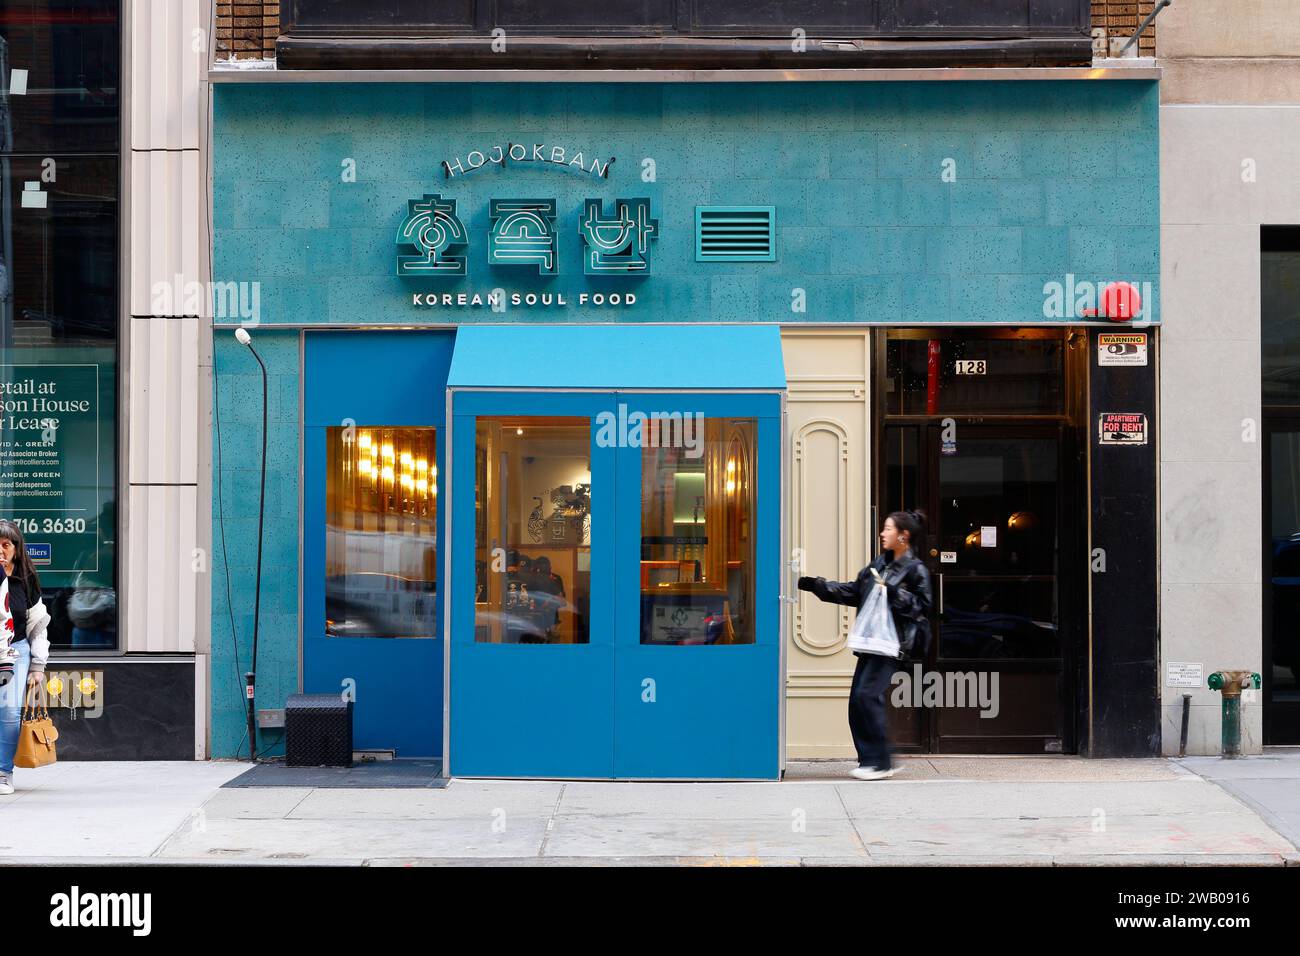 Hojokban 호족반, 128 Madison Ave, New York, NYC storefront photo of a Korean soul food restaurant in Midtown Manhattan near Koreatown. Stock Photo